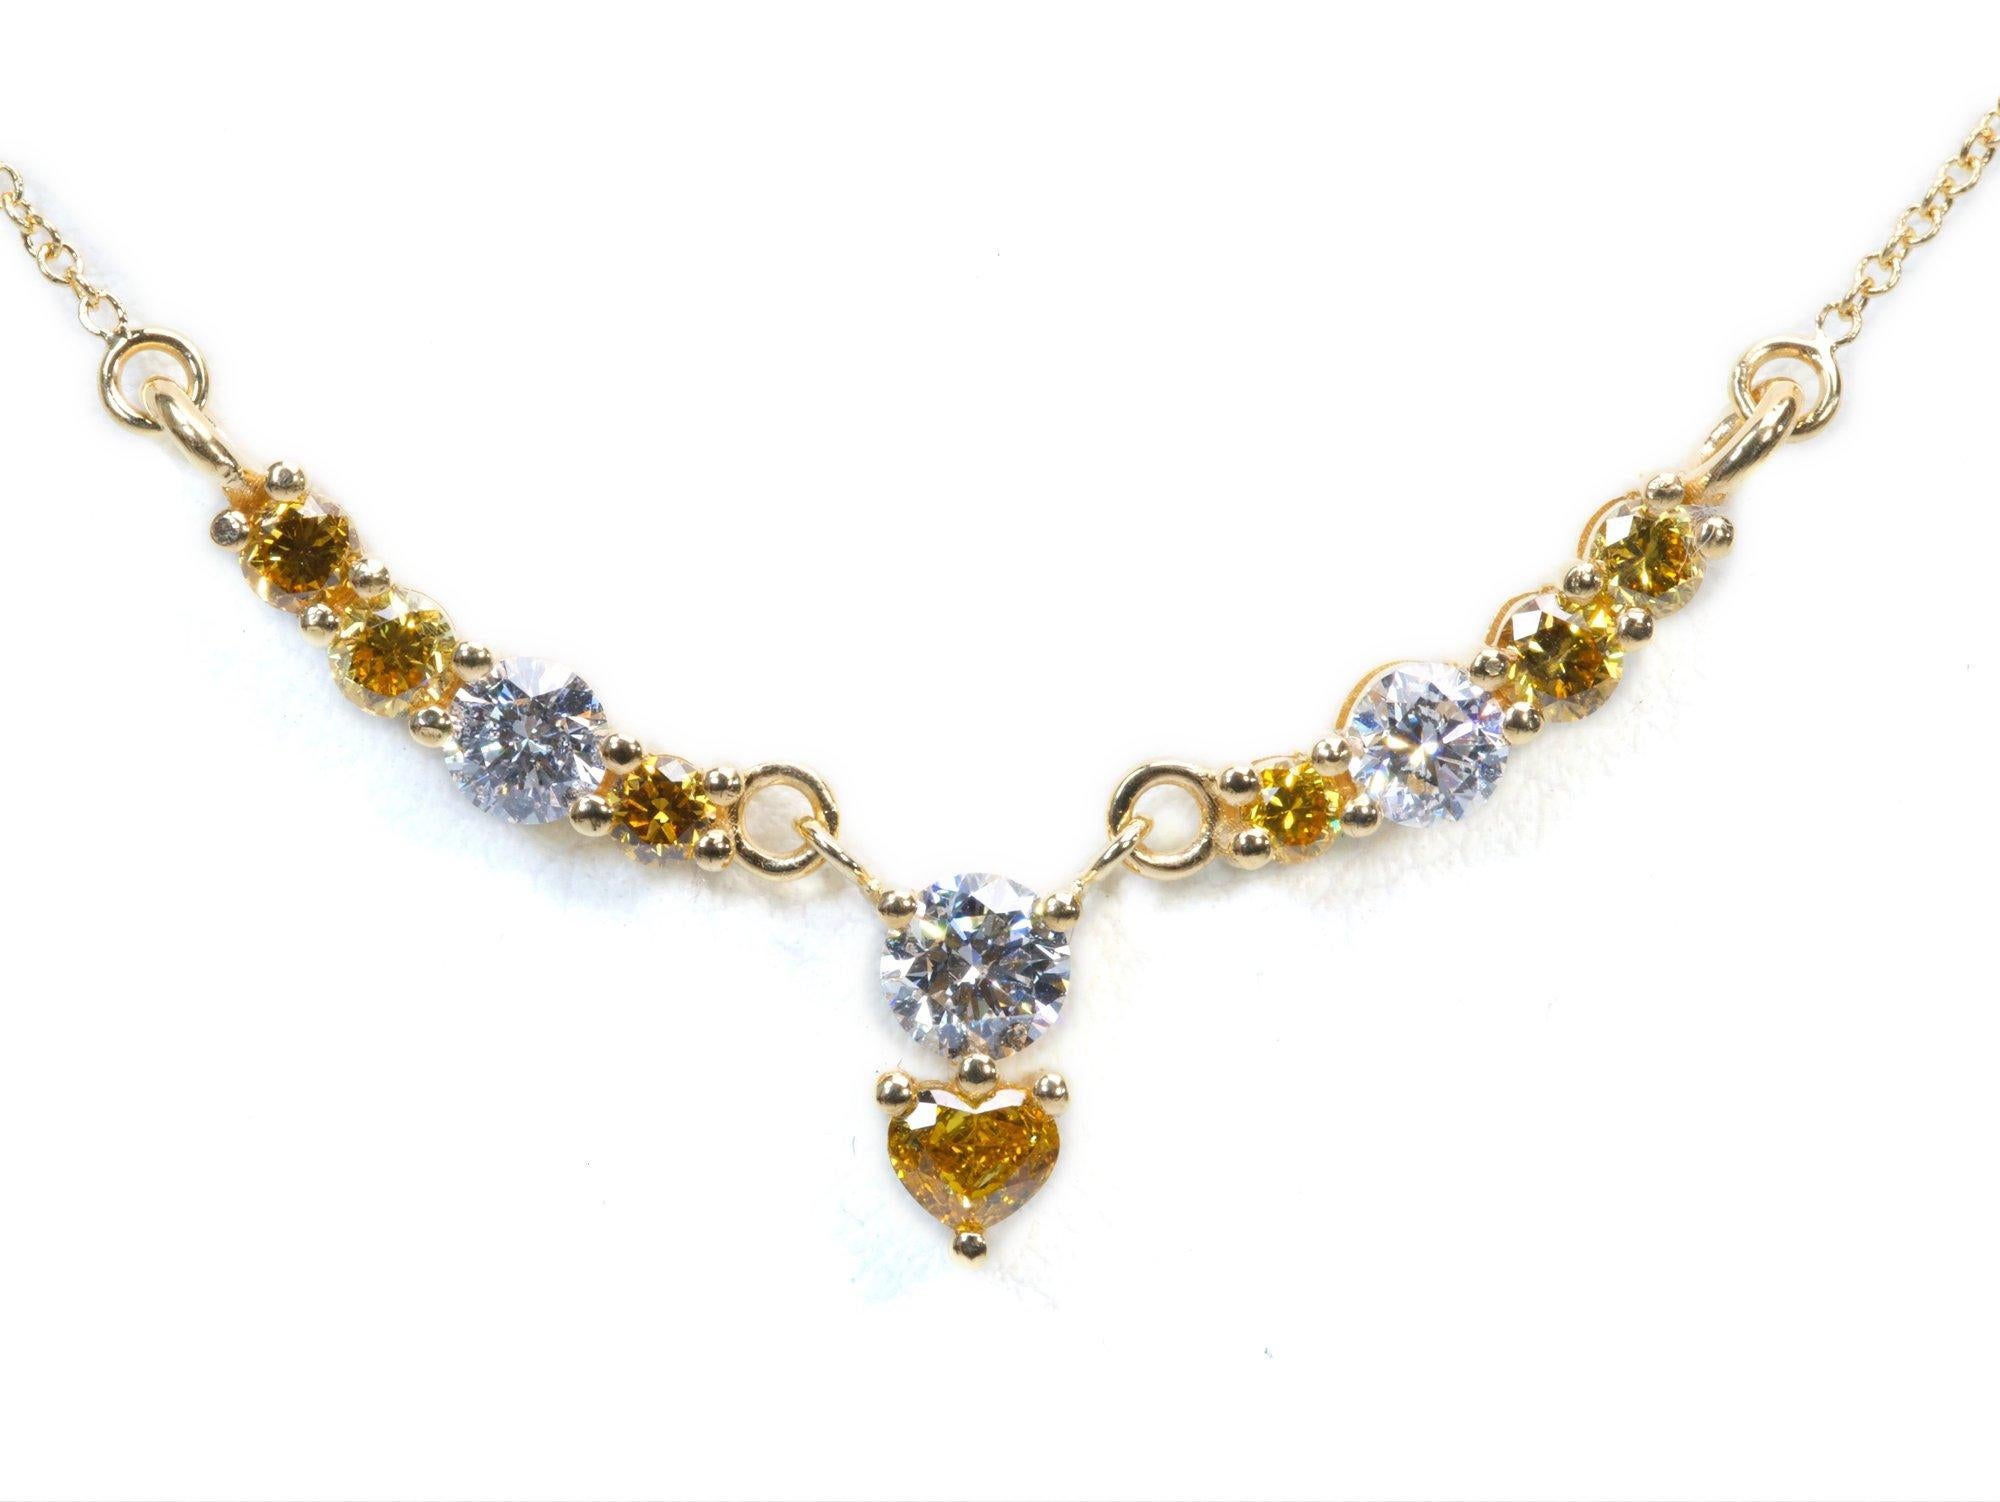 Round Cut Dazzling 18k Yellow Gold Pendant Necklace w/ 0.67ct Natural Diamonds, AIG Cert